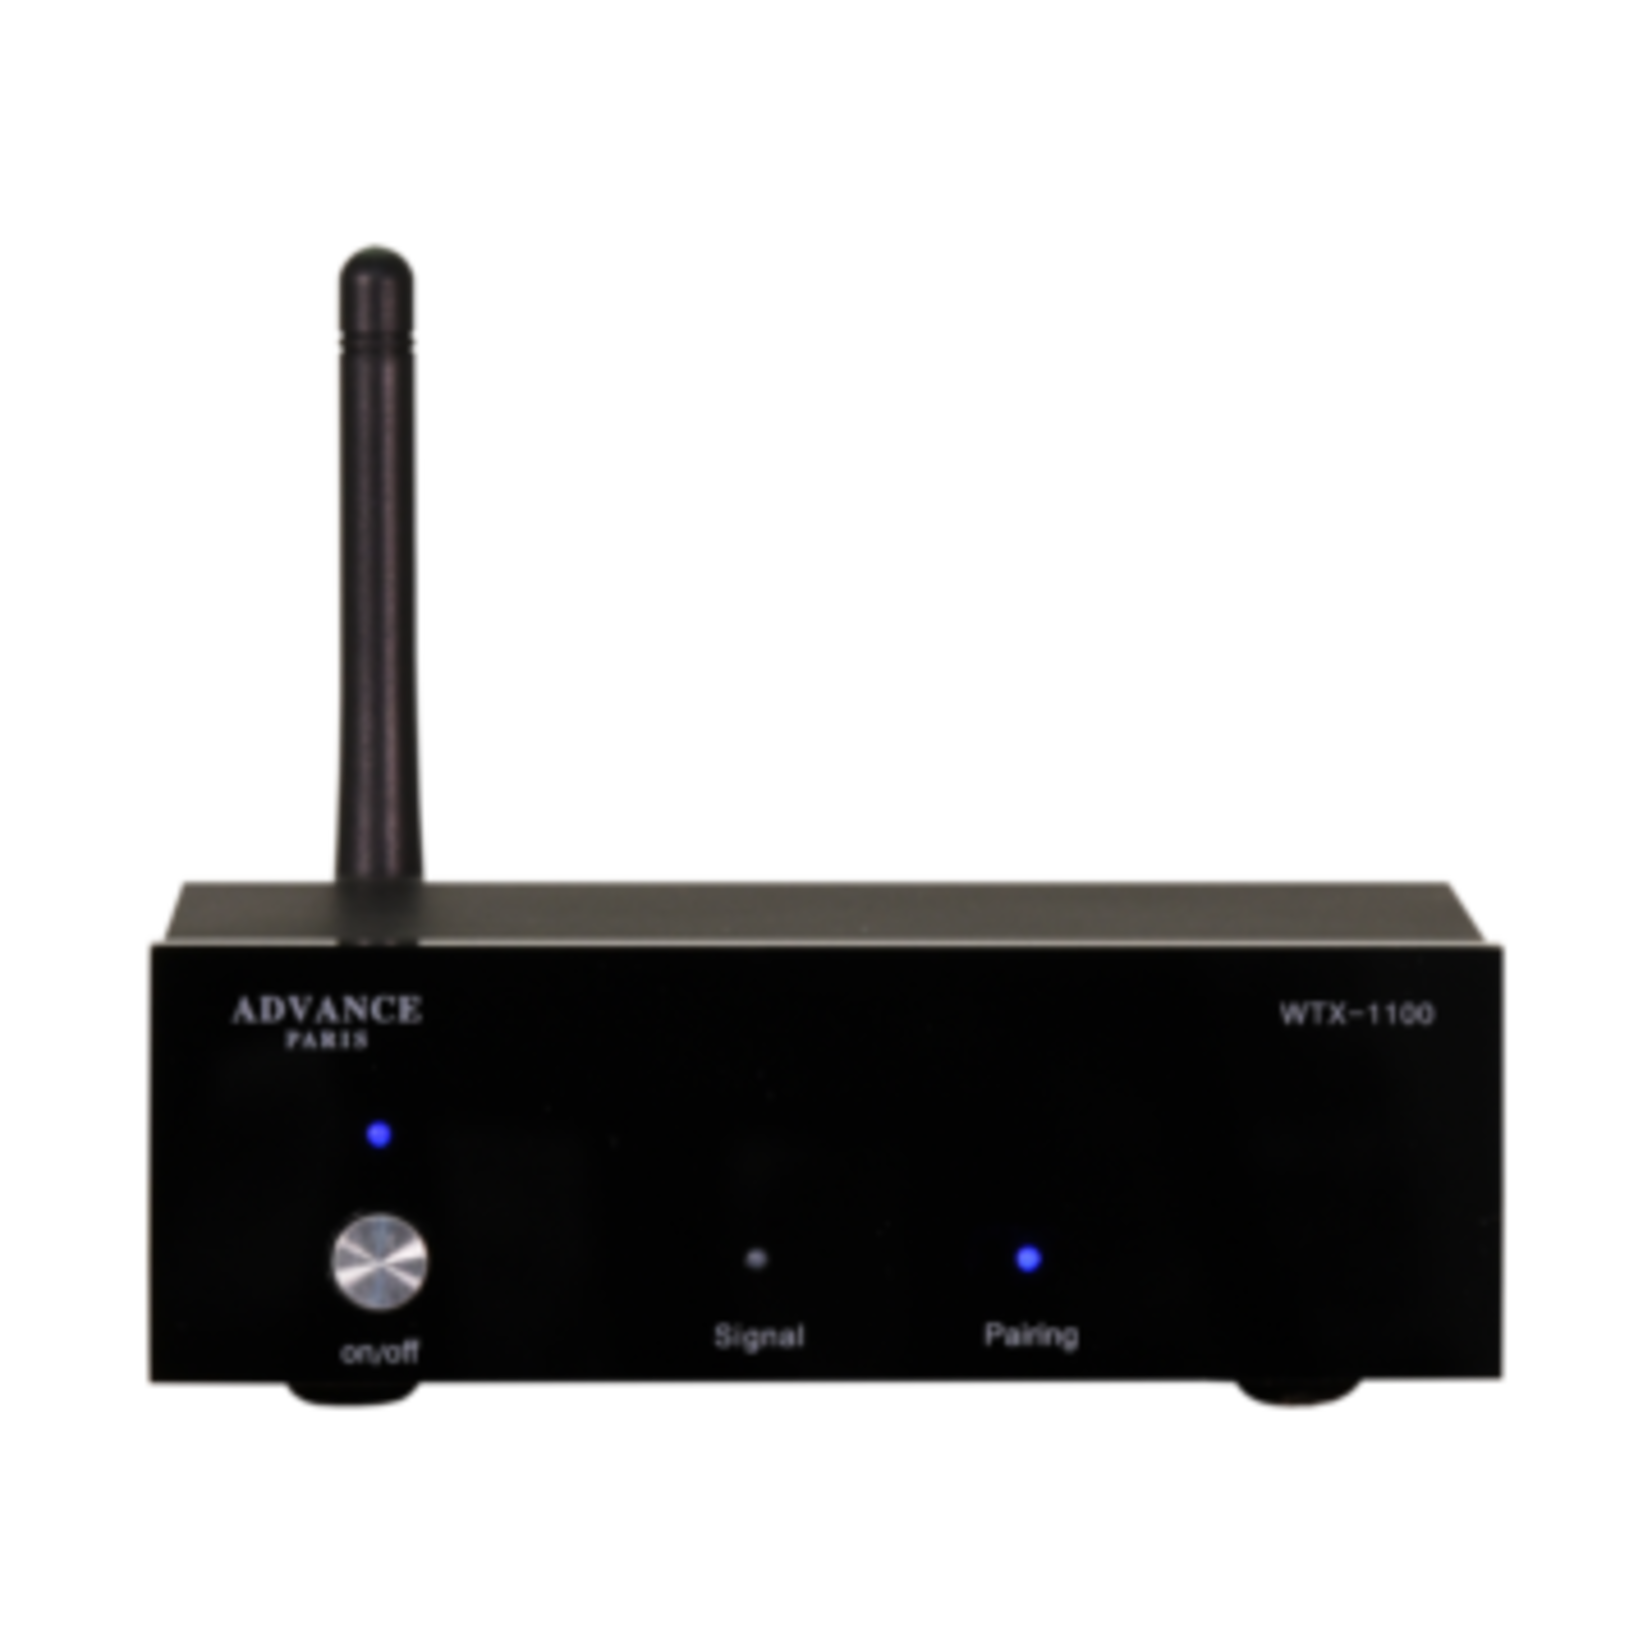 Advance Paris WTX-1100 BLUETOOTH APTX 5.0 HD ONTVANGER